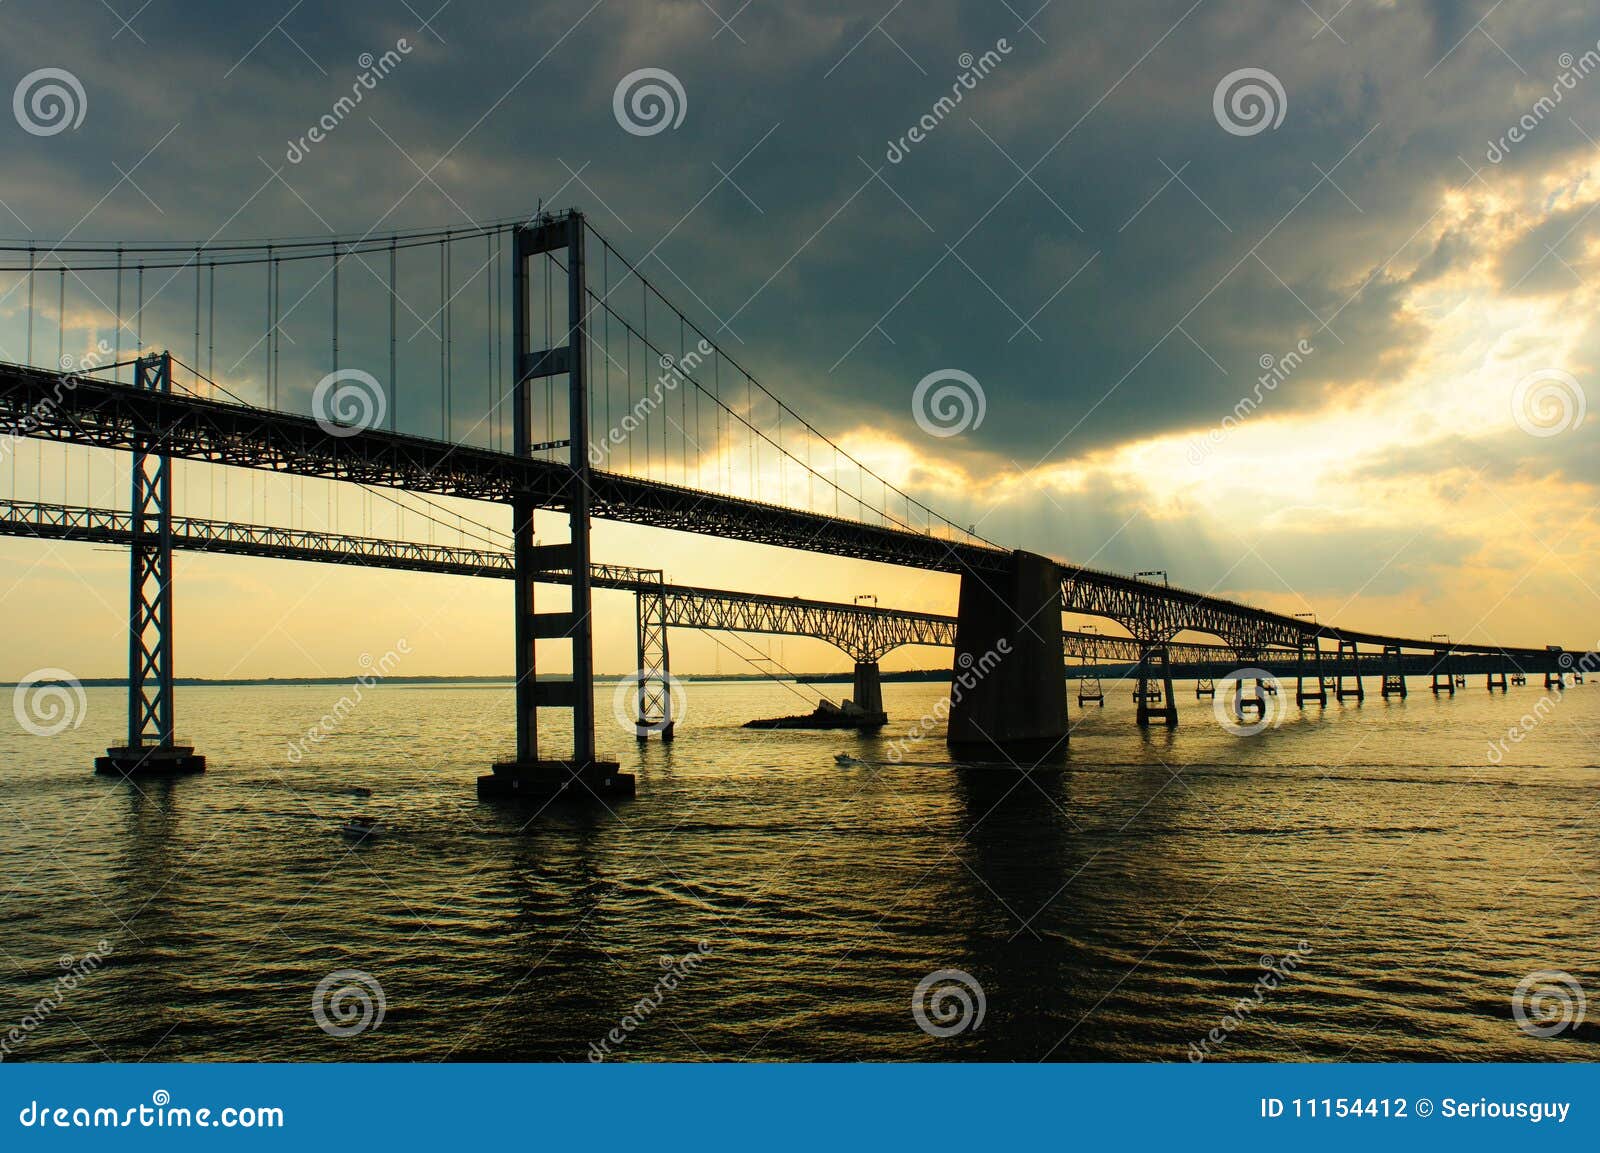 chesapeake bay bridges from a cruise ship deck